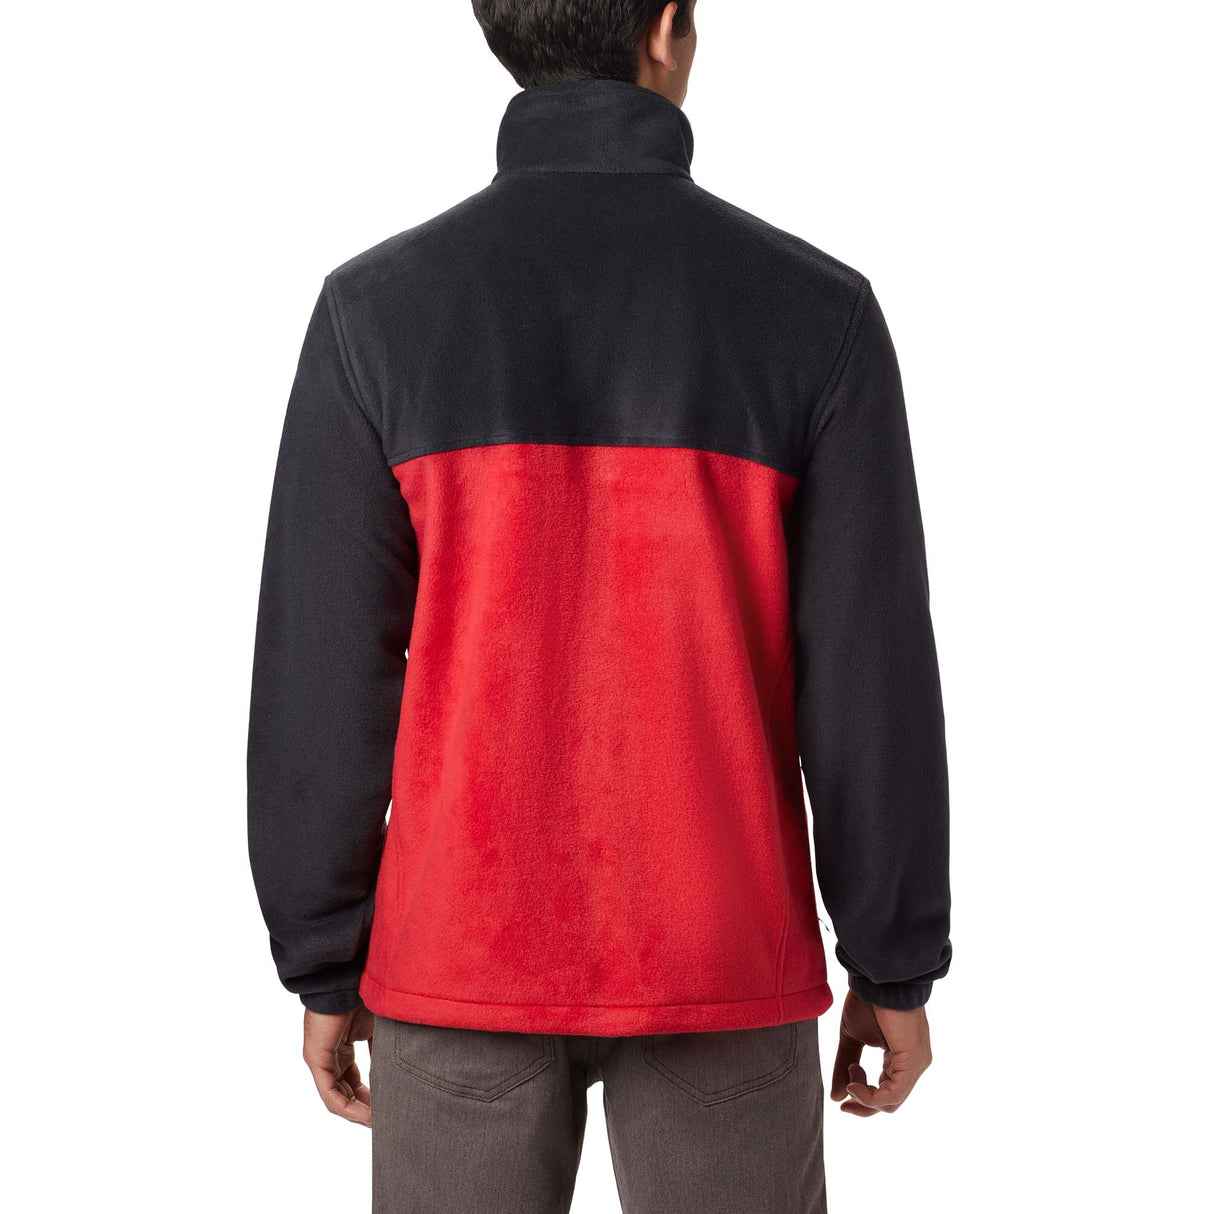 Columbia Steens Mountain full zip 2.0 veste laine polaire rouge noir homme dos